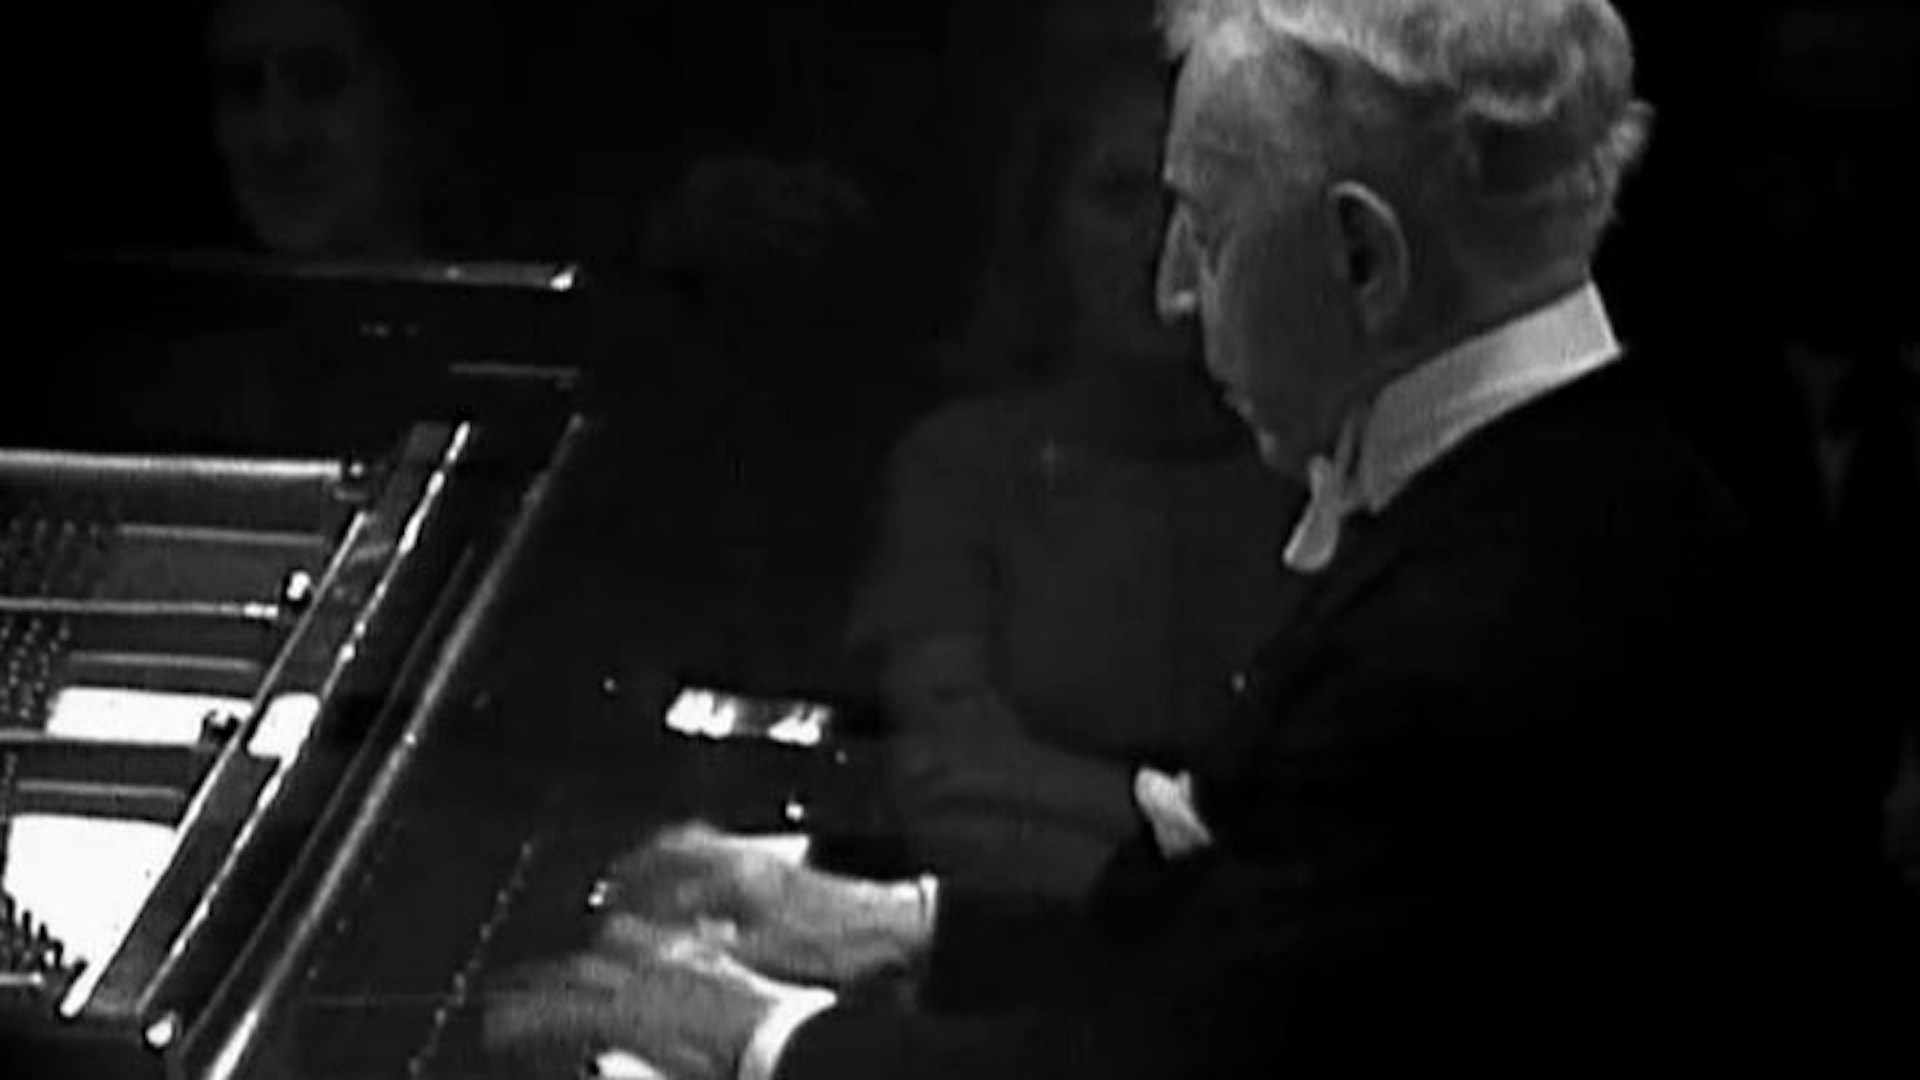 Time machine: April 18, 1940: Arthur Rubinstein plays Augusta concert